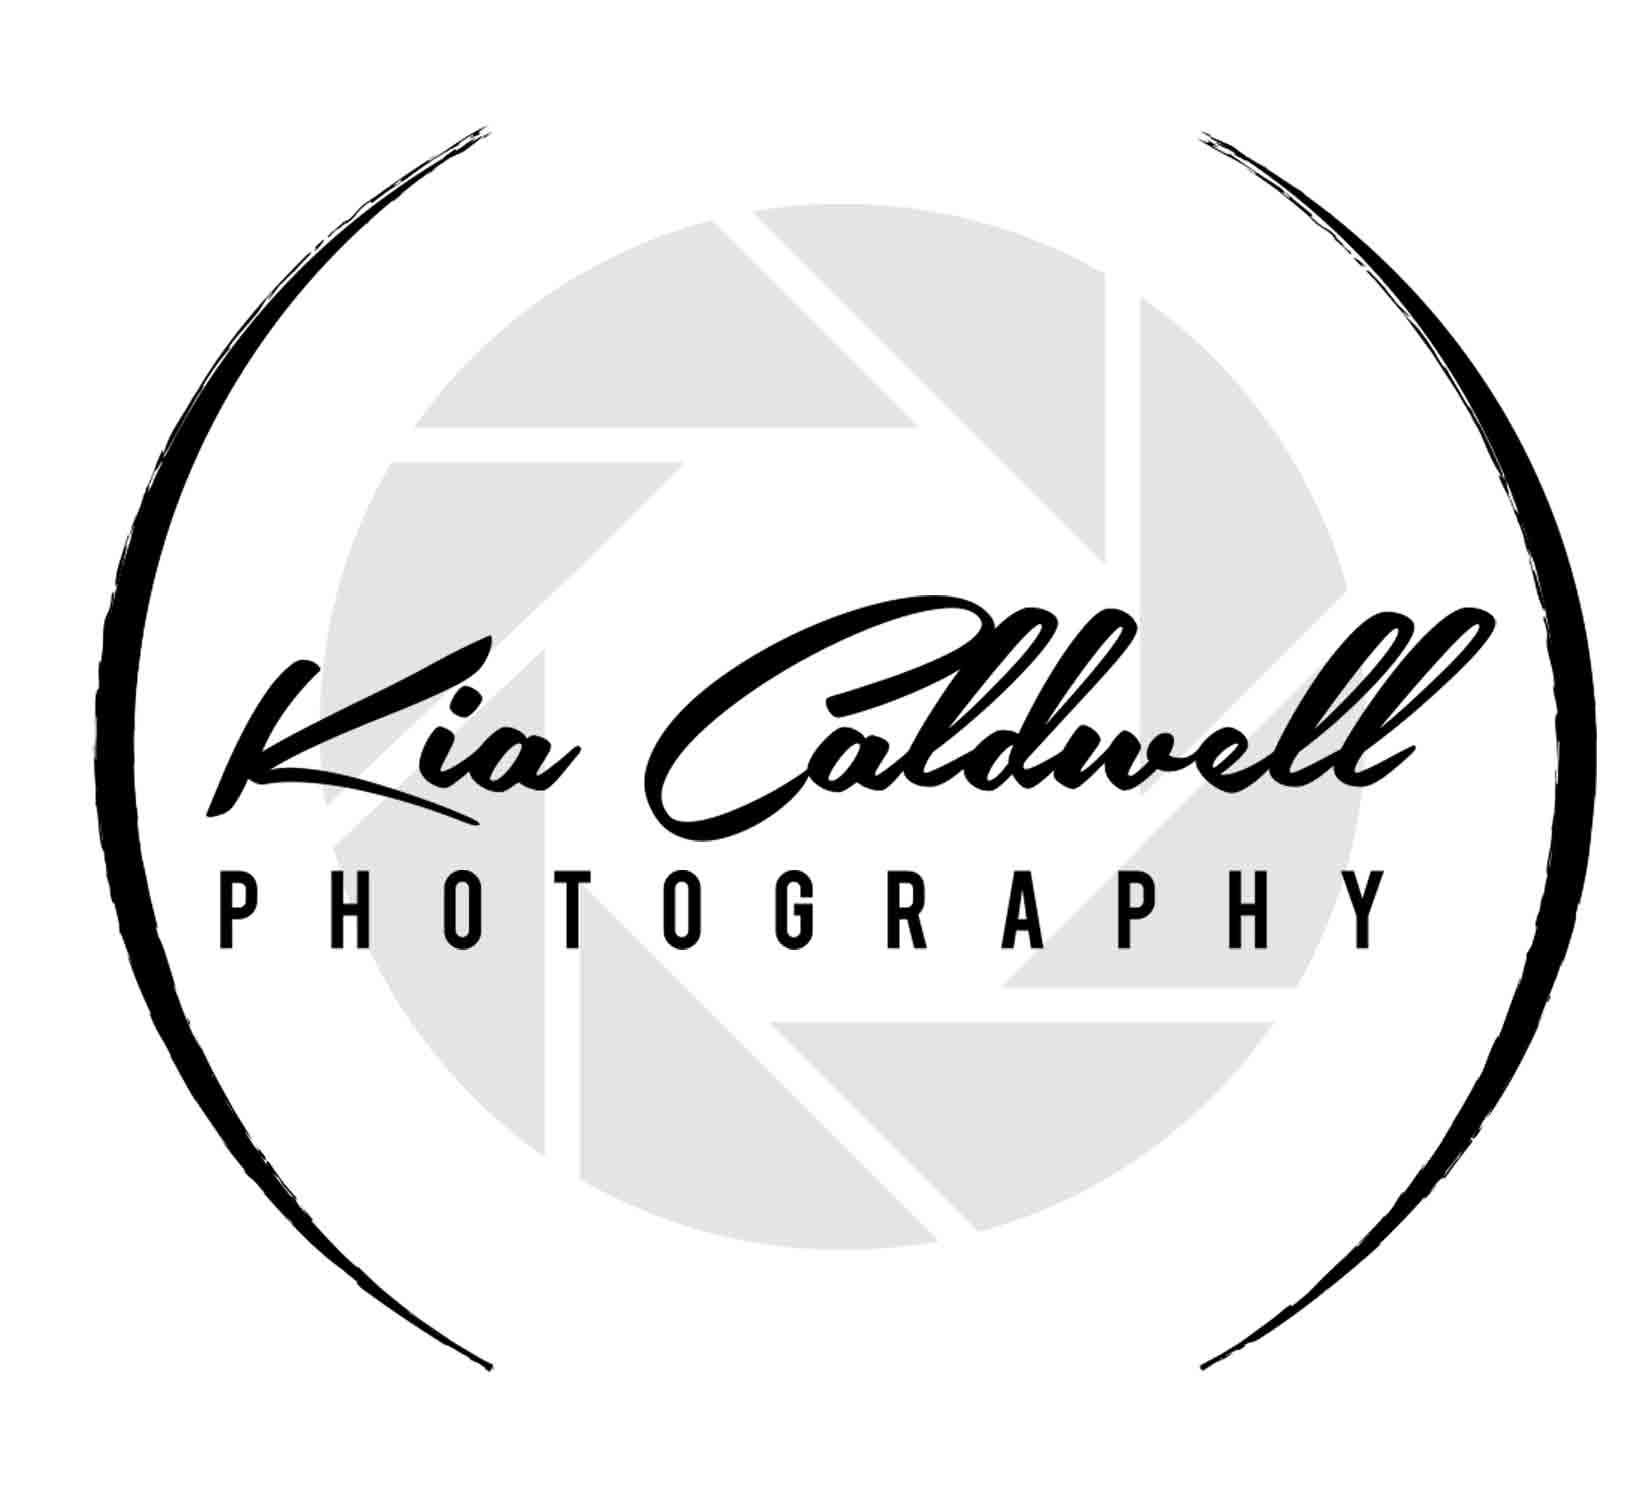 Kia Caldwell Photography